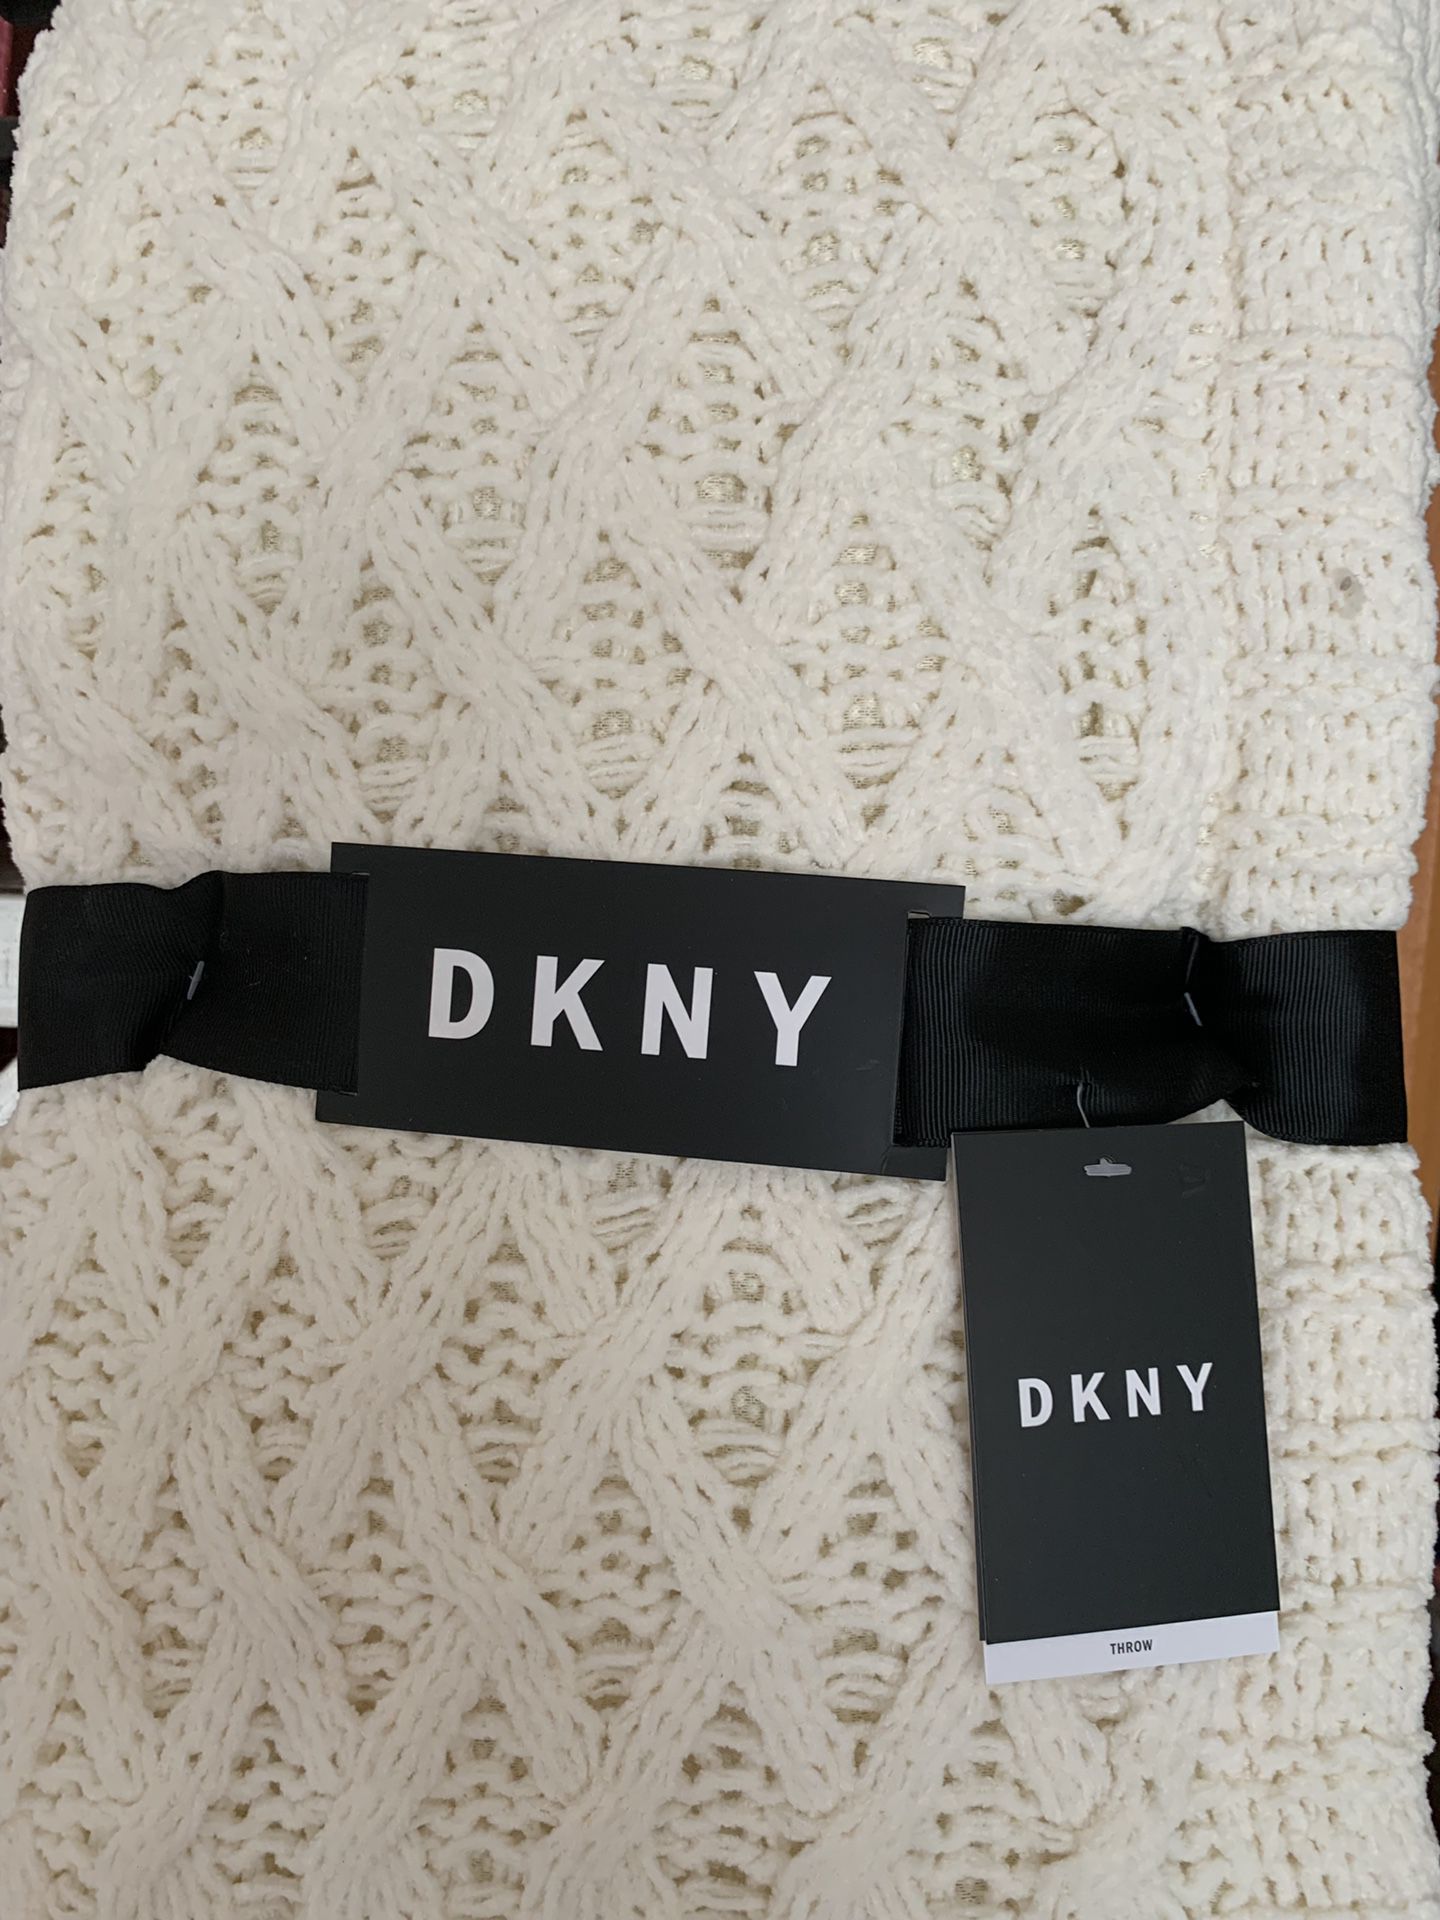 Dkny Chenille Cable Knit Blanket Discount | website.jkuat.ac.ke